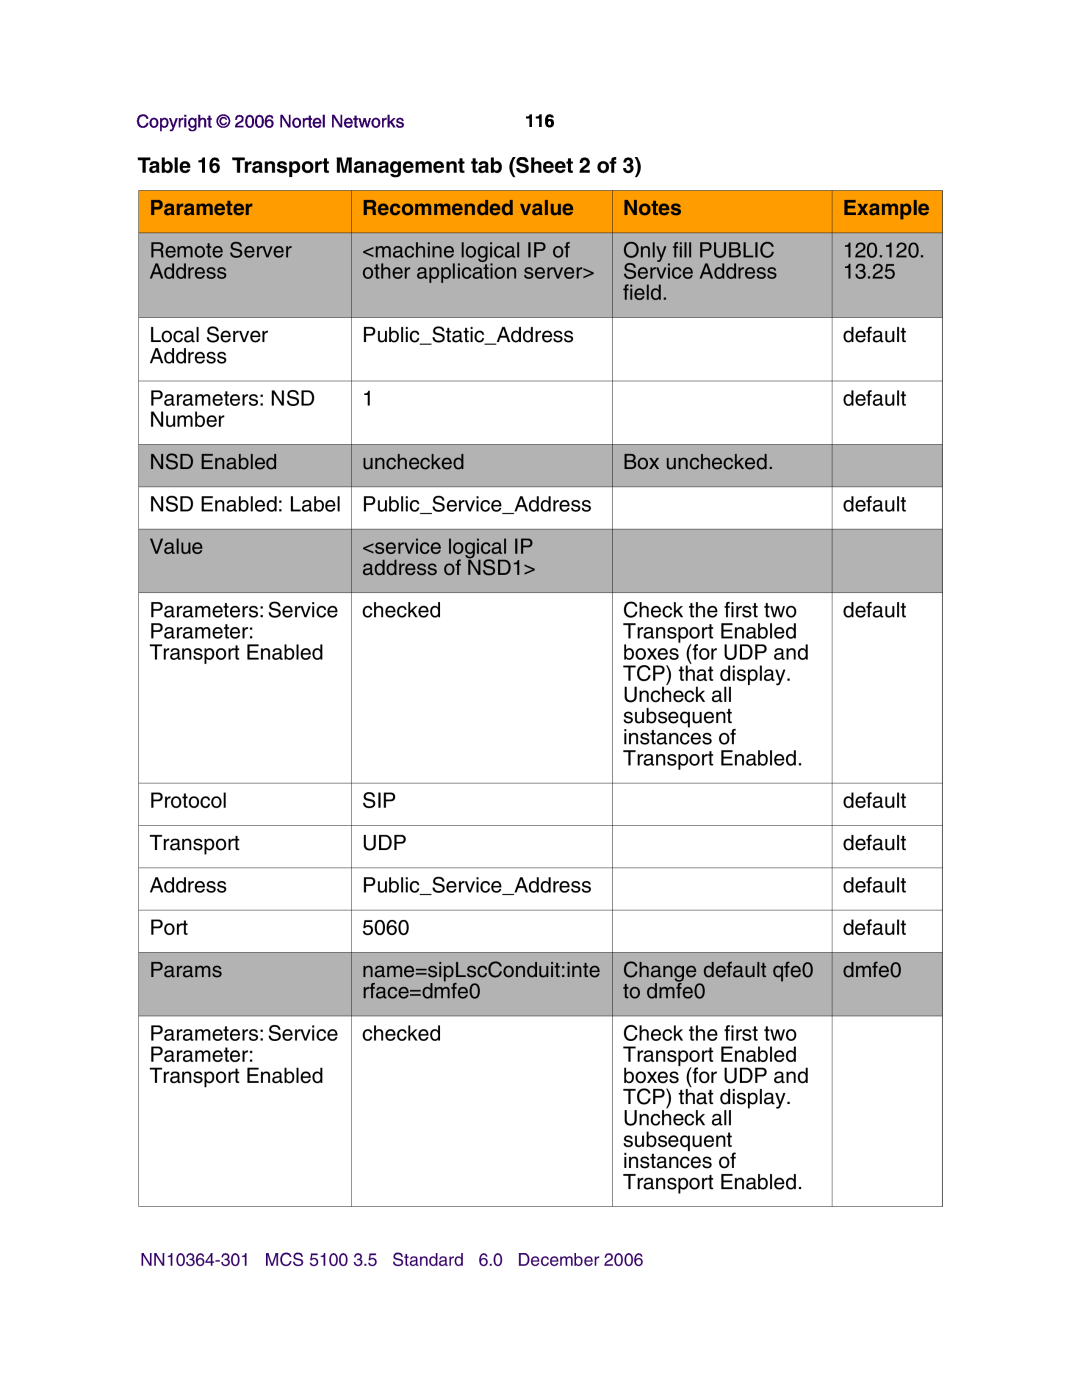 Nortel Networks V100 manual Transport Management tab Sheet 2 of, Parameter, Recommended value, Example 